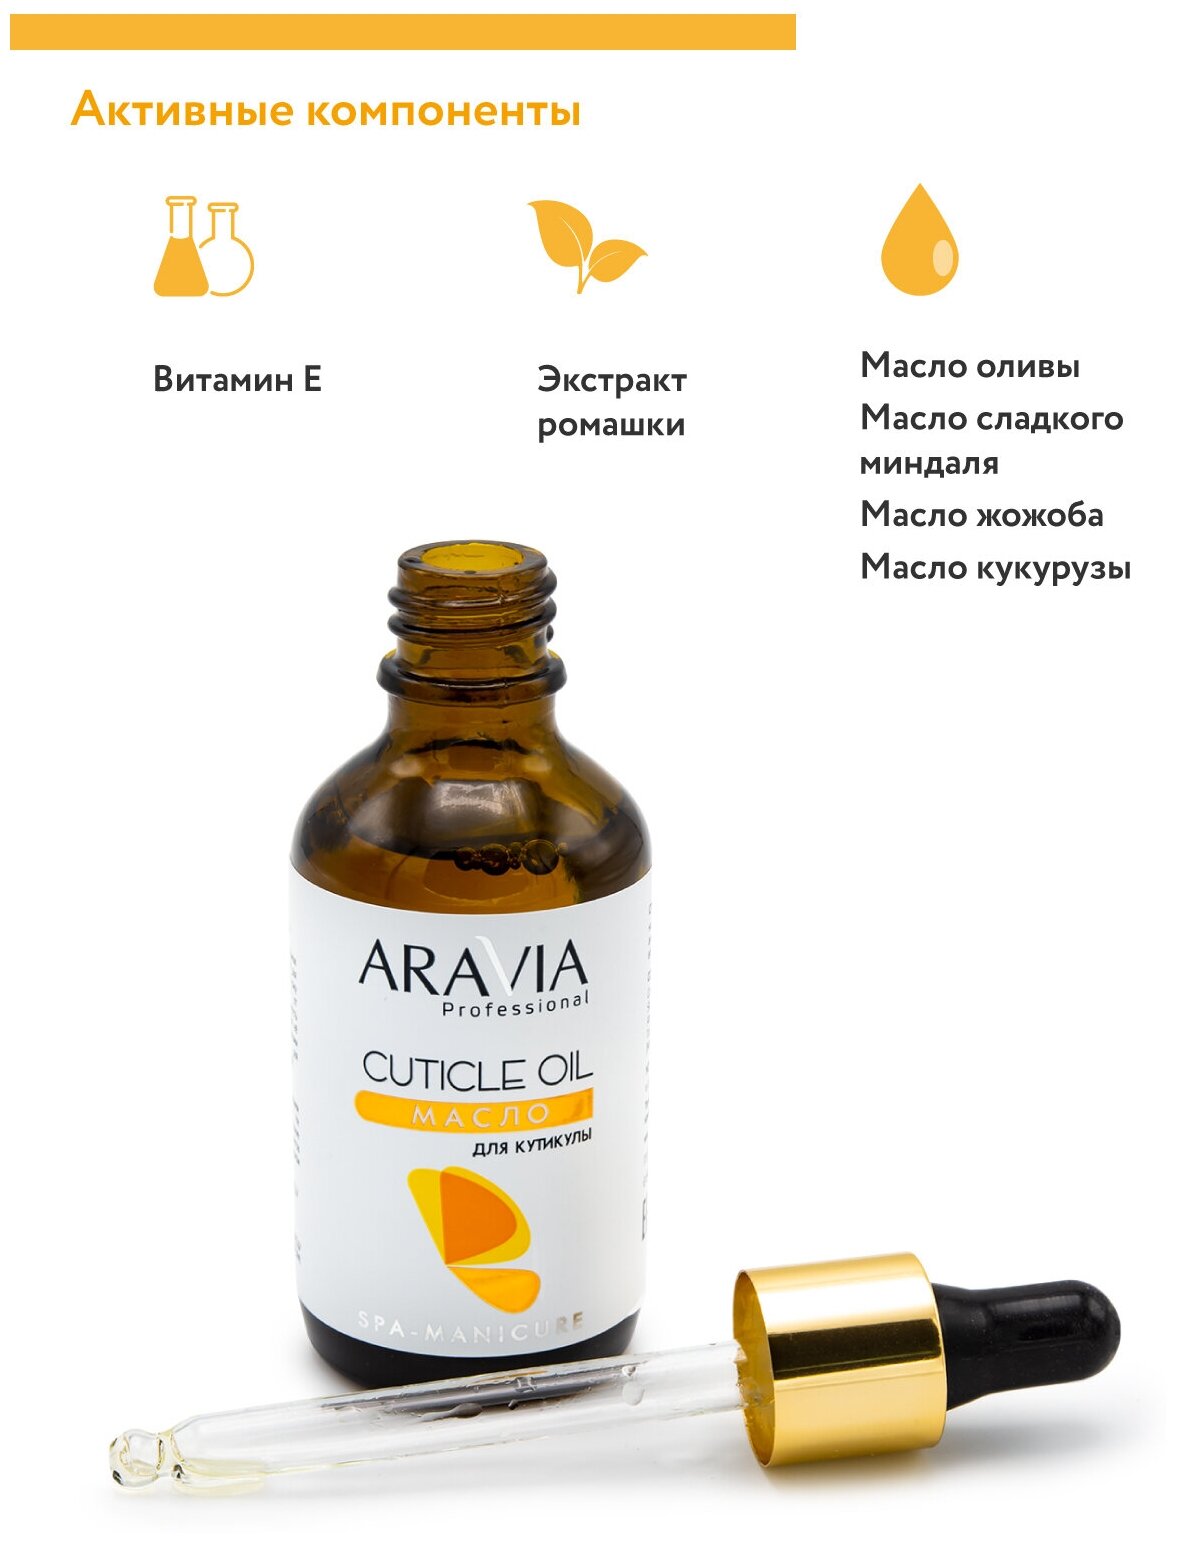 Aravia professional Масло для кутикулы "Cuticle Oil", 50 мл (Aravia professional, ) - фото №4